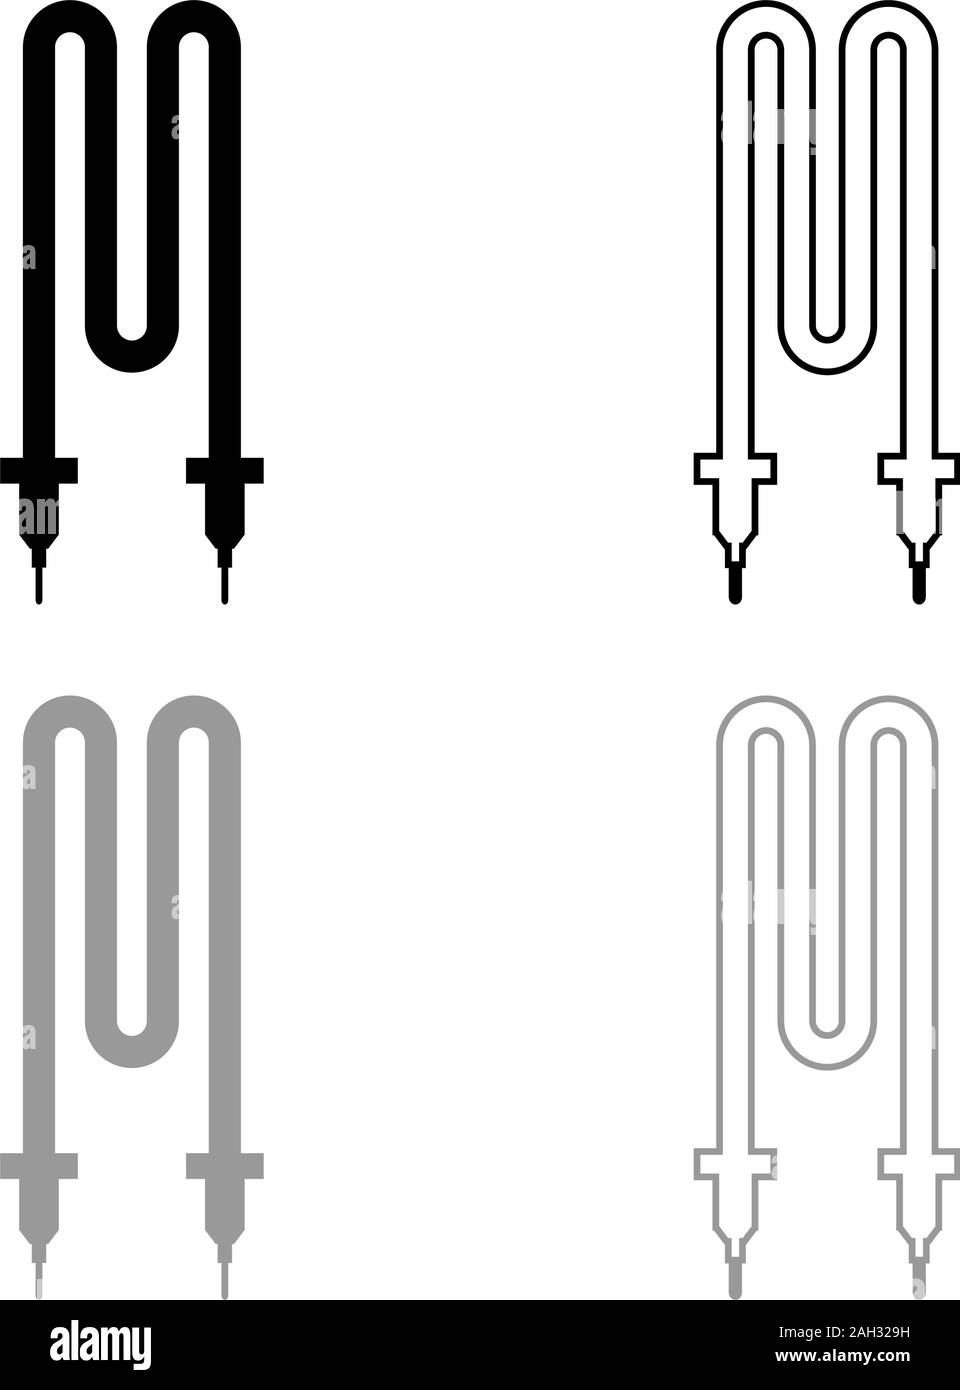 Thermische elektrisches Heizelement Symbol Umrisse Set schwarz Farbe grau Vektor-illustration Flat Style simple Image Stock Vektor